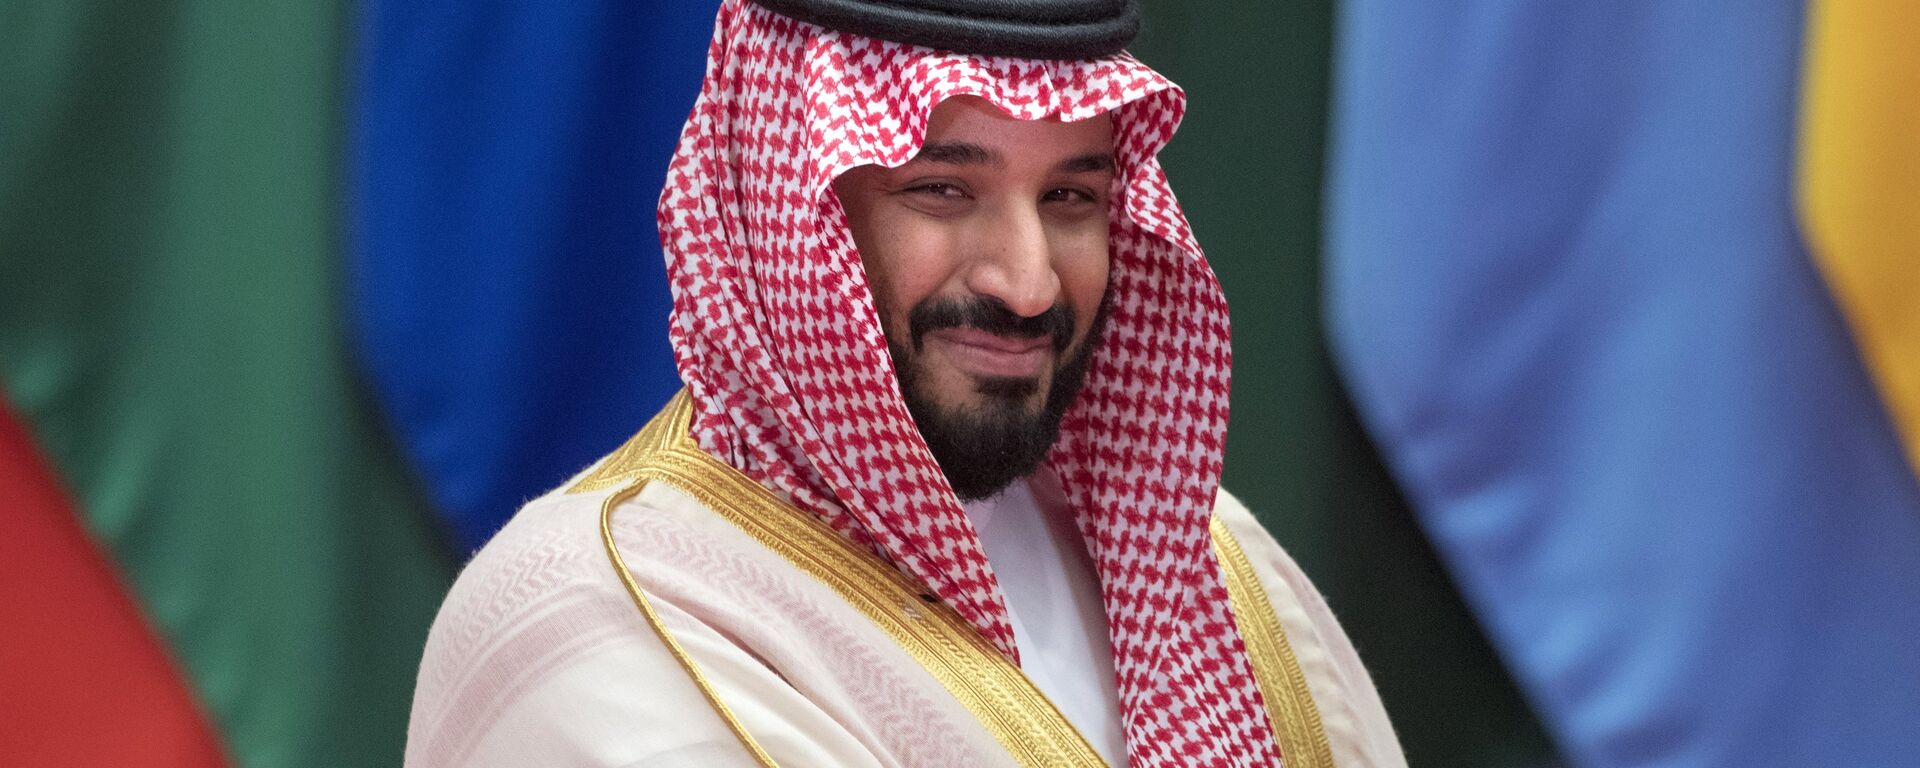 Deputy Crown Prince and Defense Minister of Saudi Arabia Mohammad bin Salman Al Saud - Sputnik International, 1920, 28.04.2021